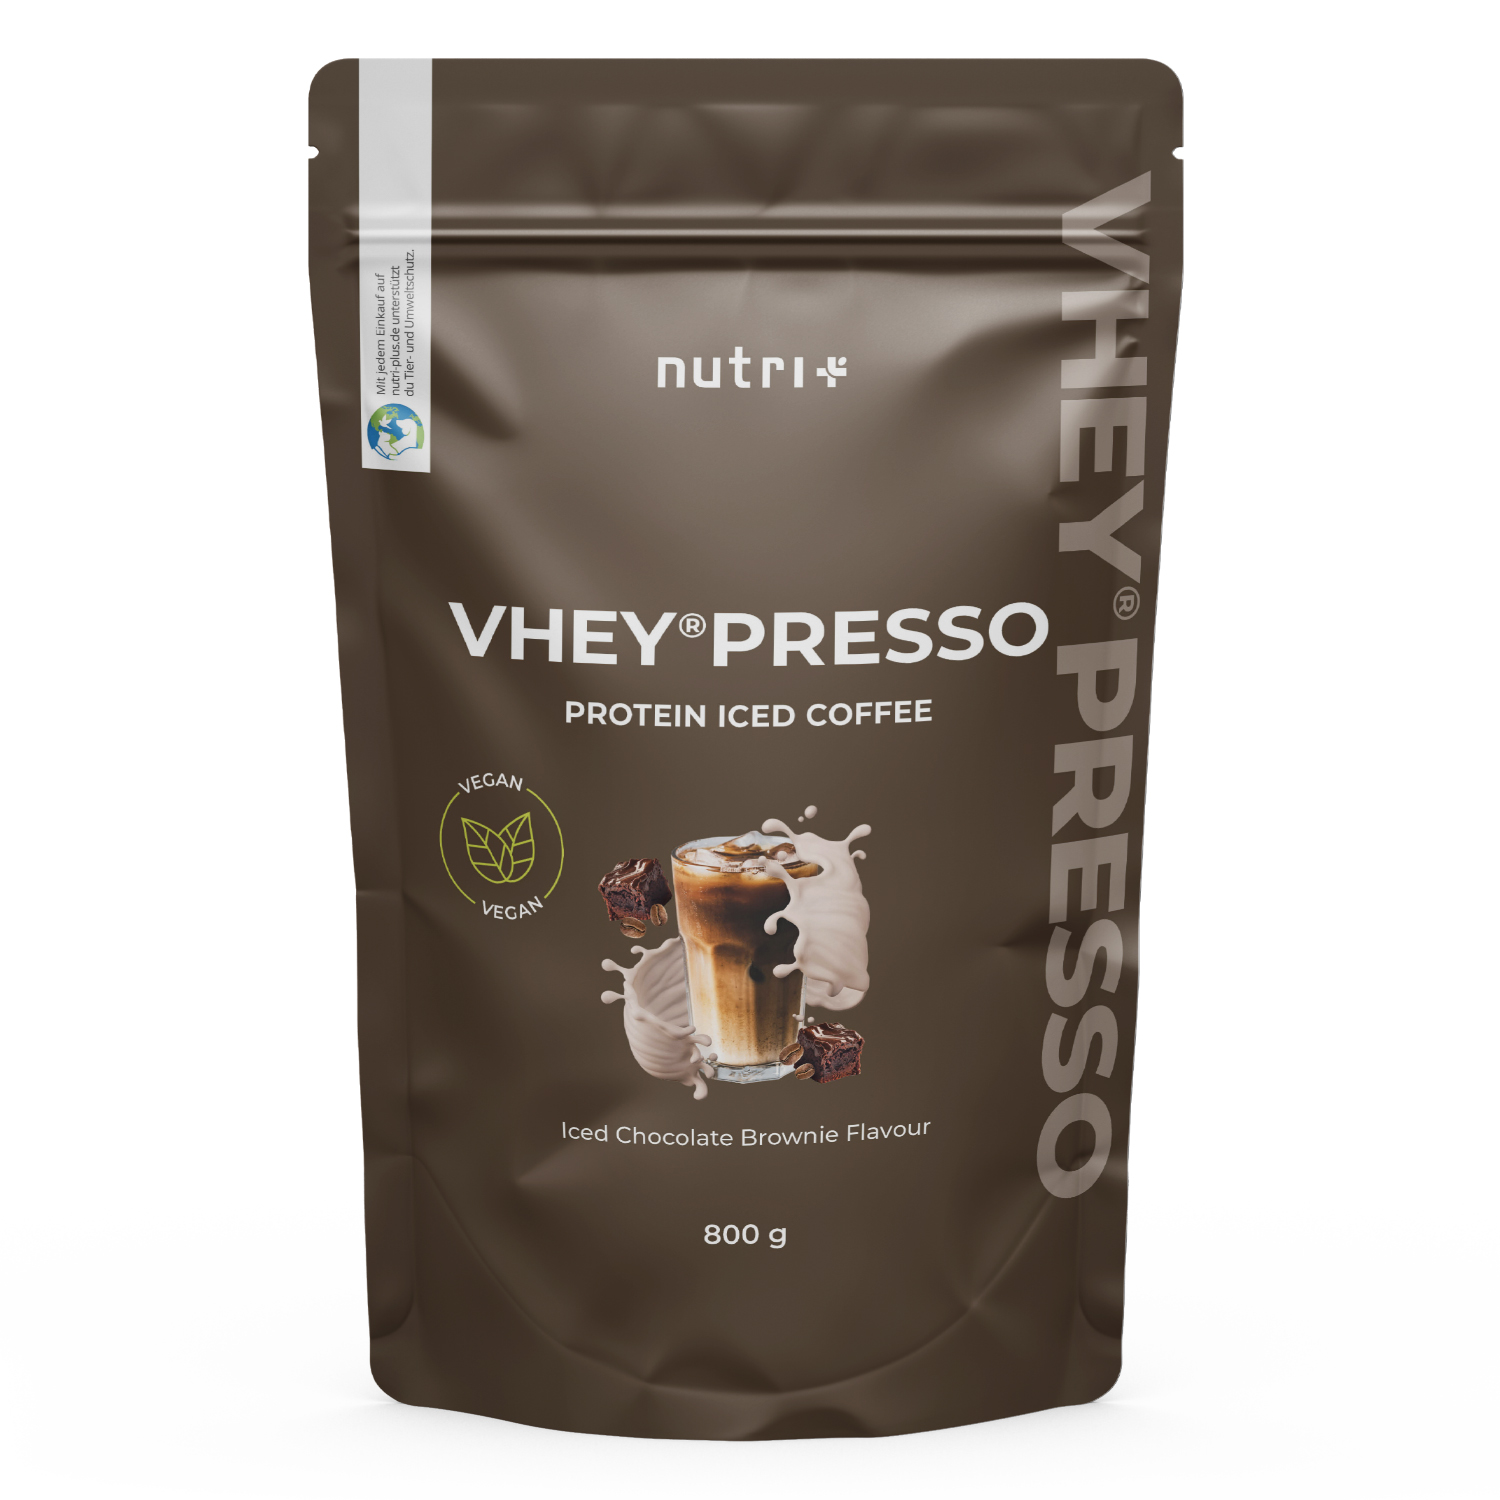 VHEY®presso - Protein Iced Coffee Chocolate-Brownie